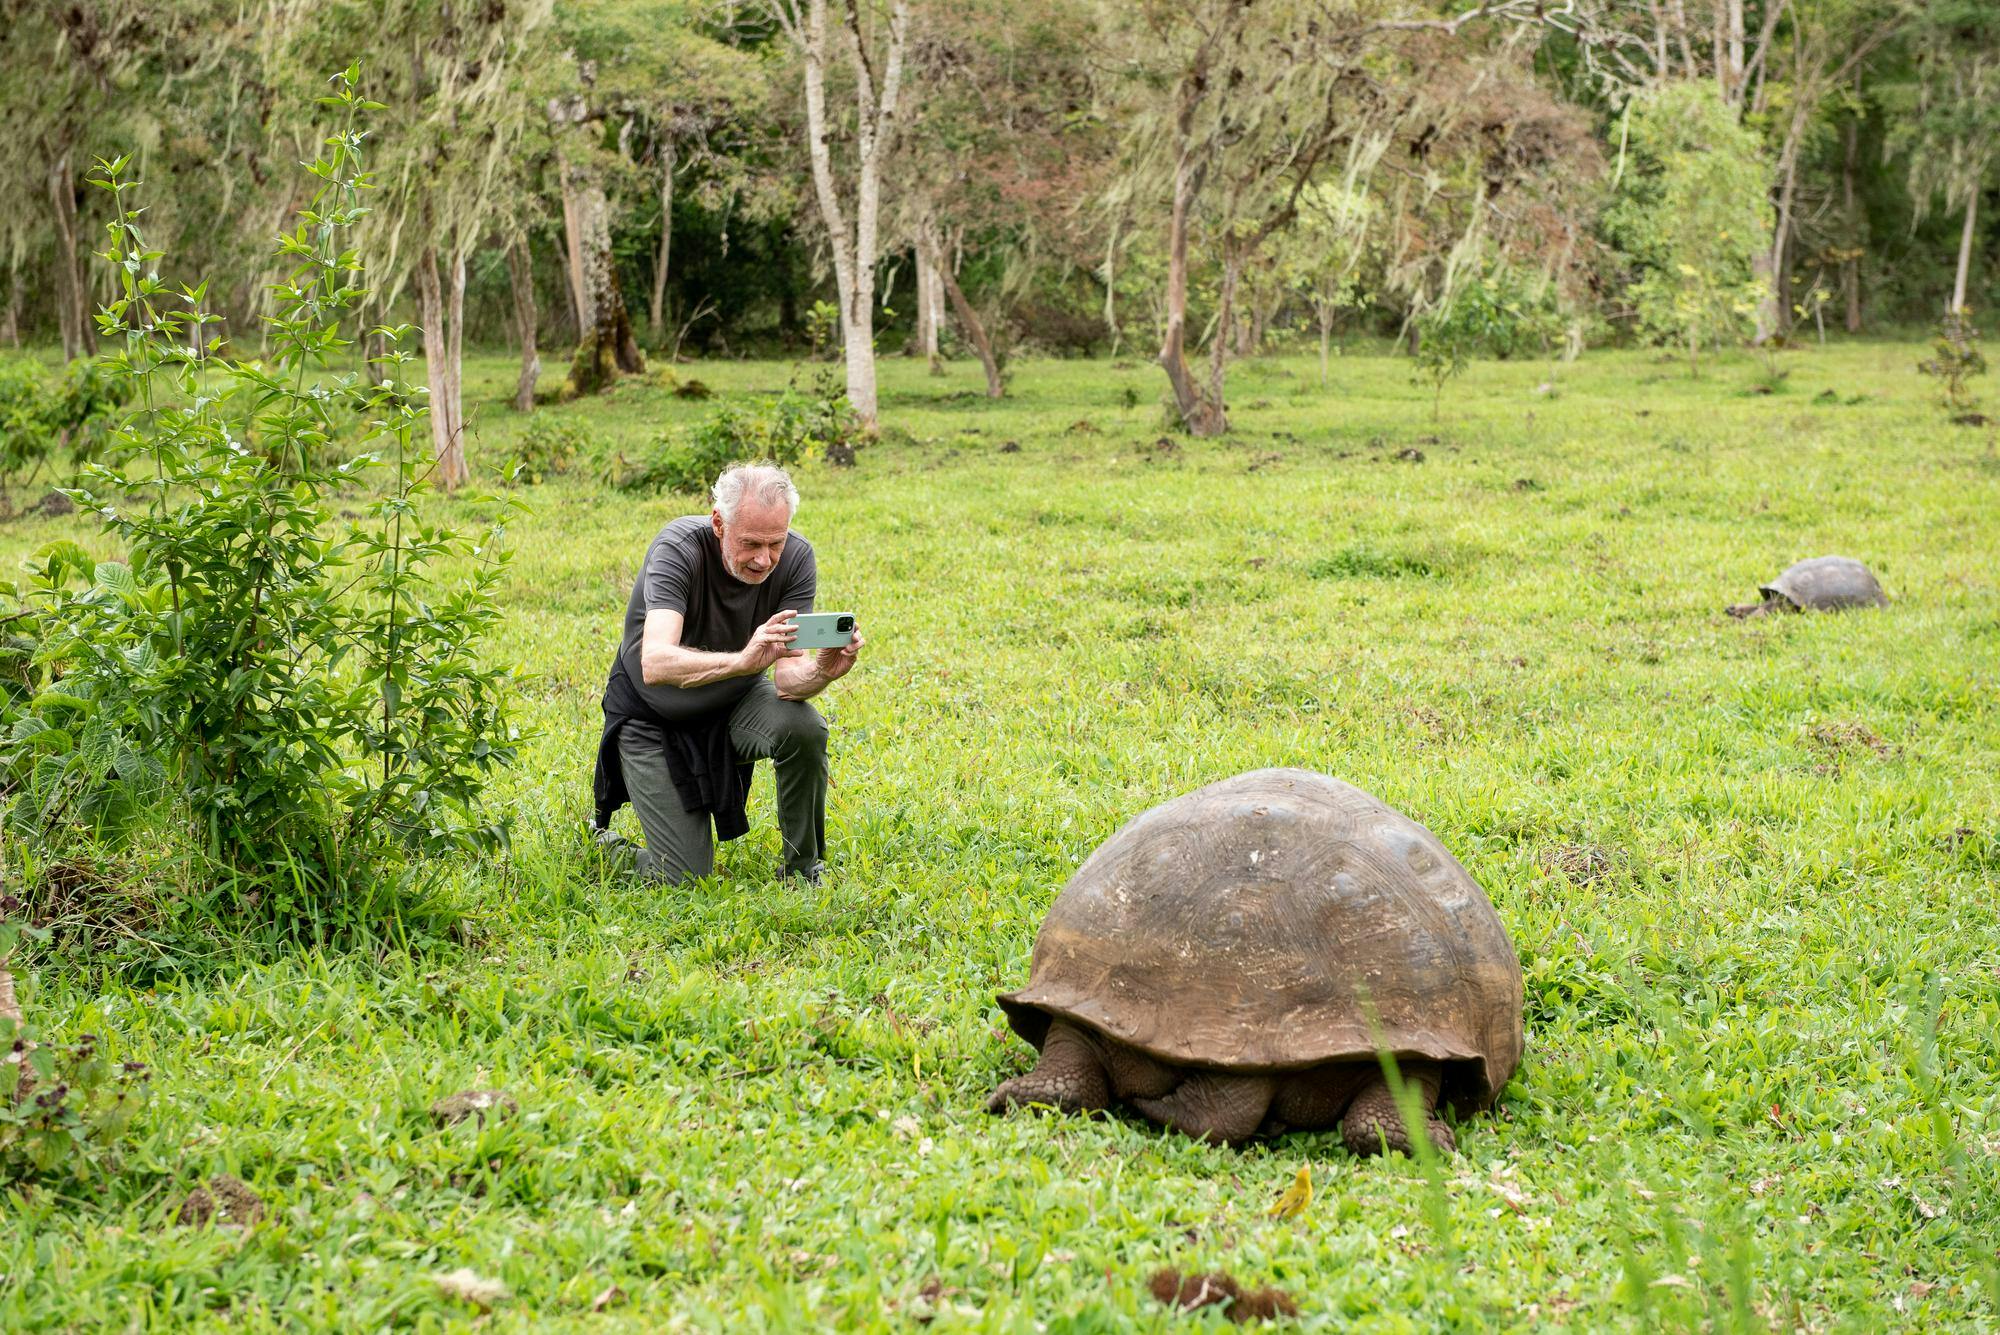 Sven Lindblad photographing a tortoise in the highlands of Santa Cruz island, Galapagos.